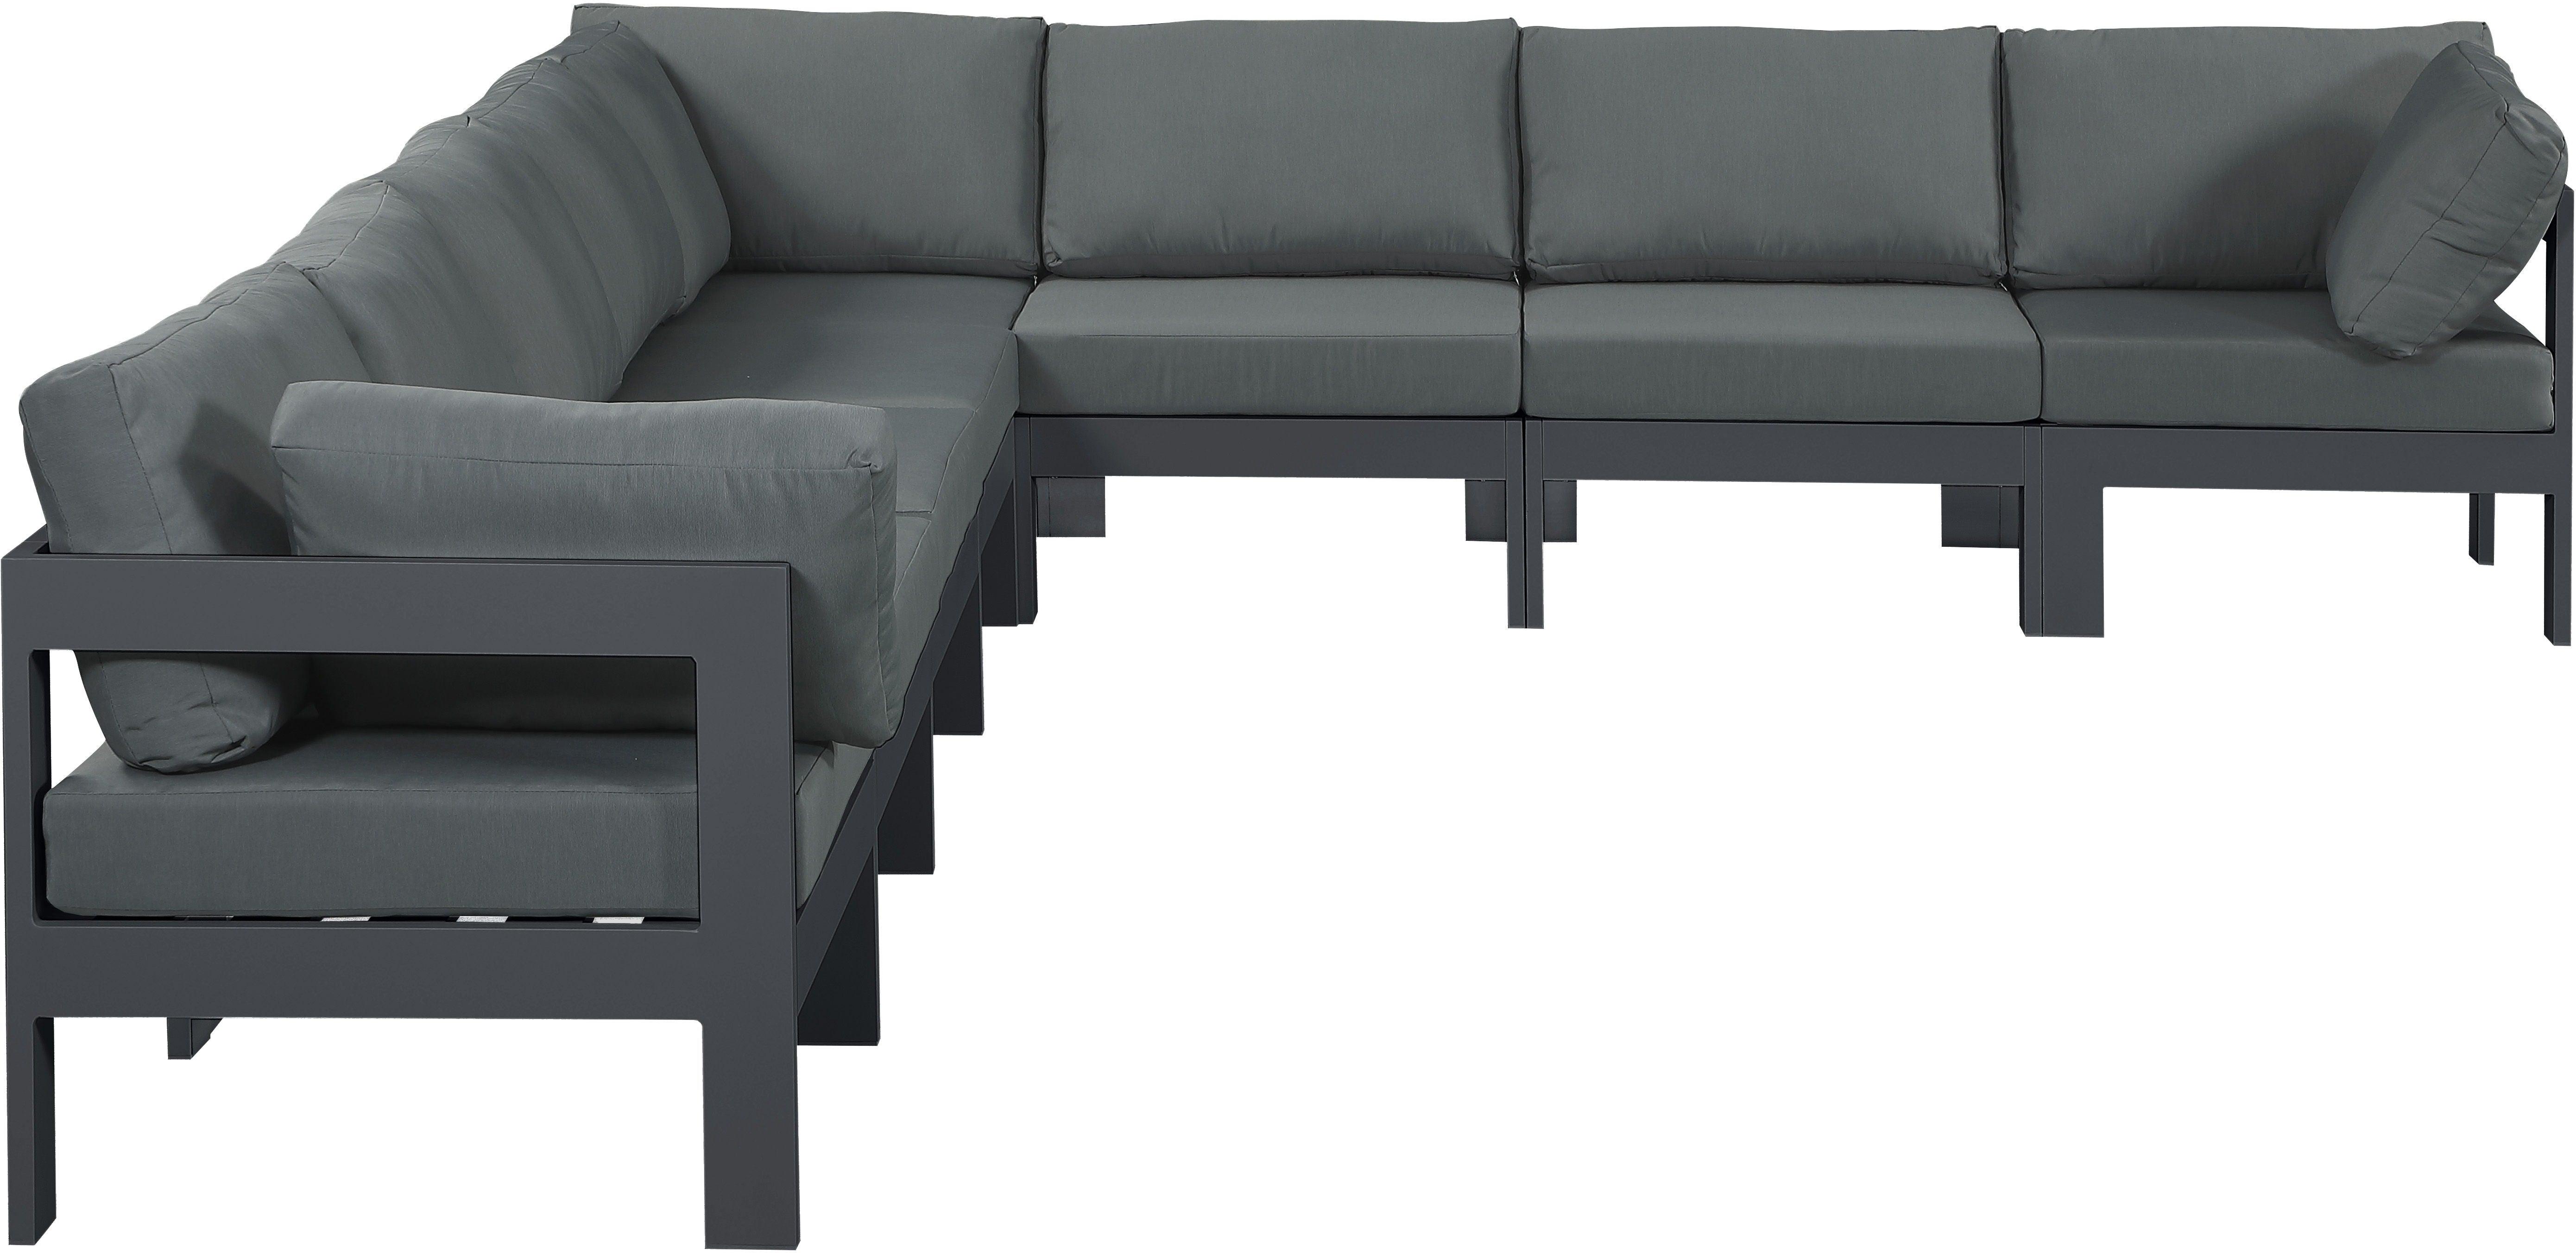 Meridian Furniture - Nizuc - Outdoor Patio Modular Sectional 8 Piece - Grey - Fabric - Modern & Contemporary - 5th Avenue Furniture